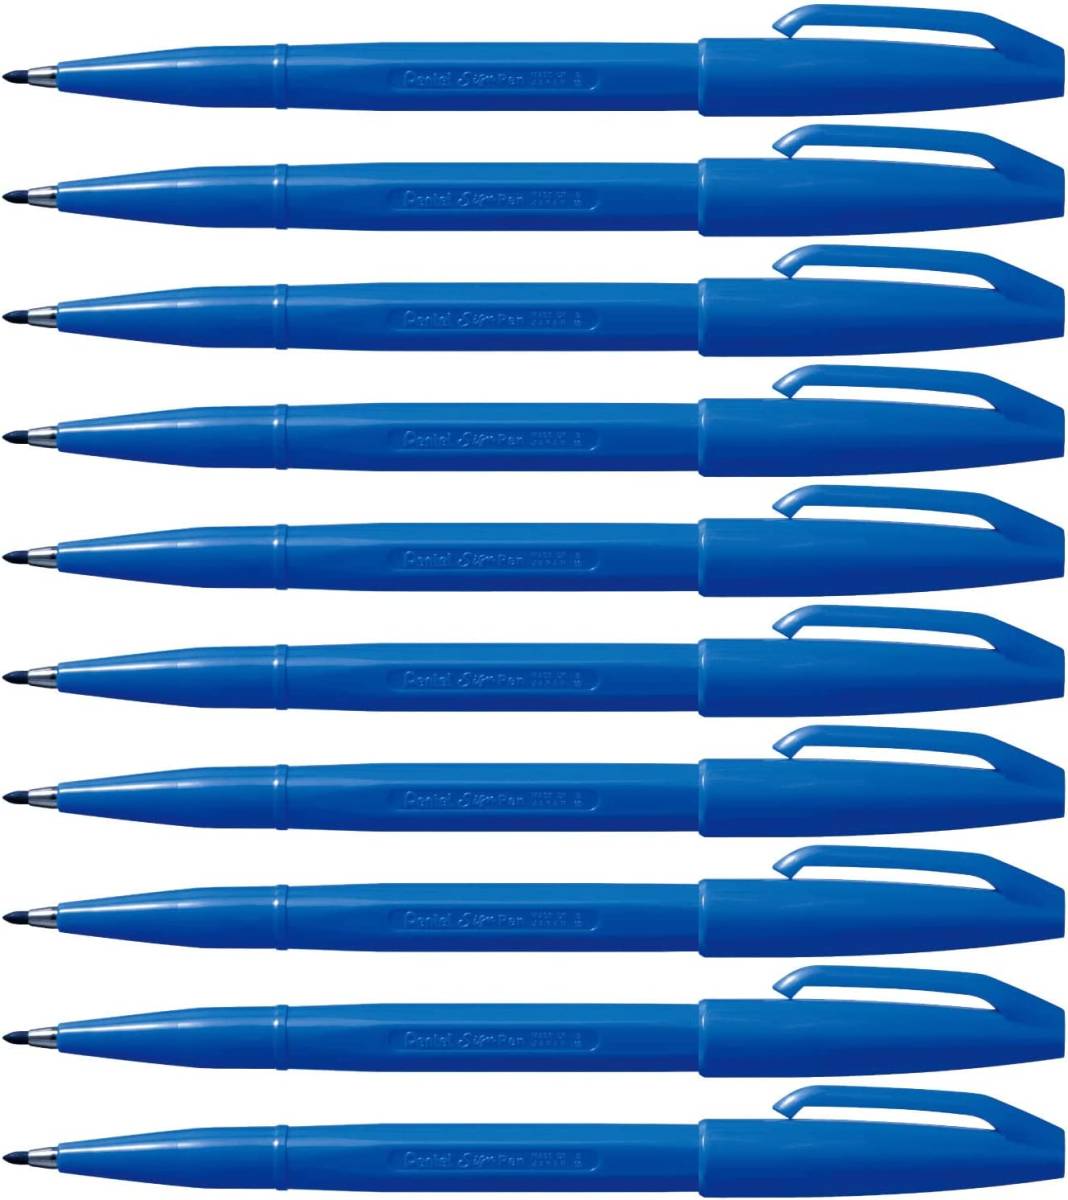  Pentel ручка на водной основе фломастер S520-CD синий 10 шт. комплект 